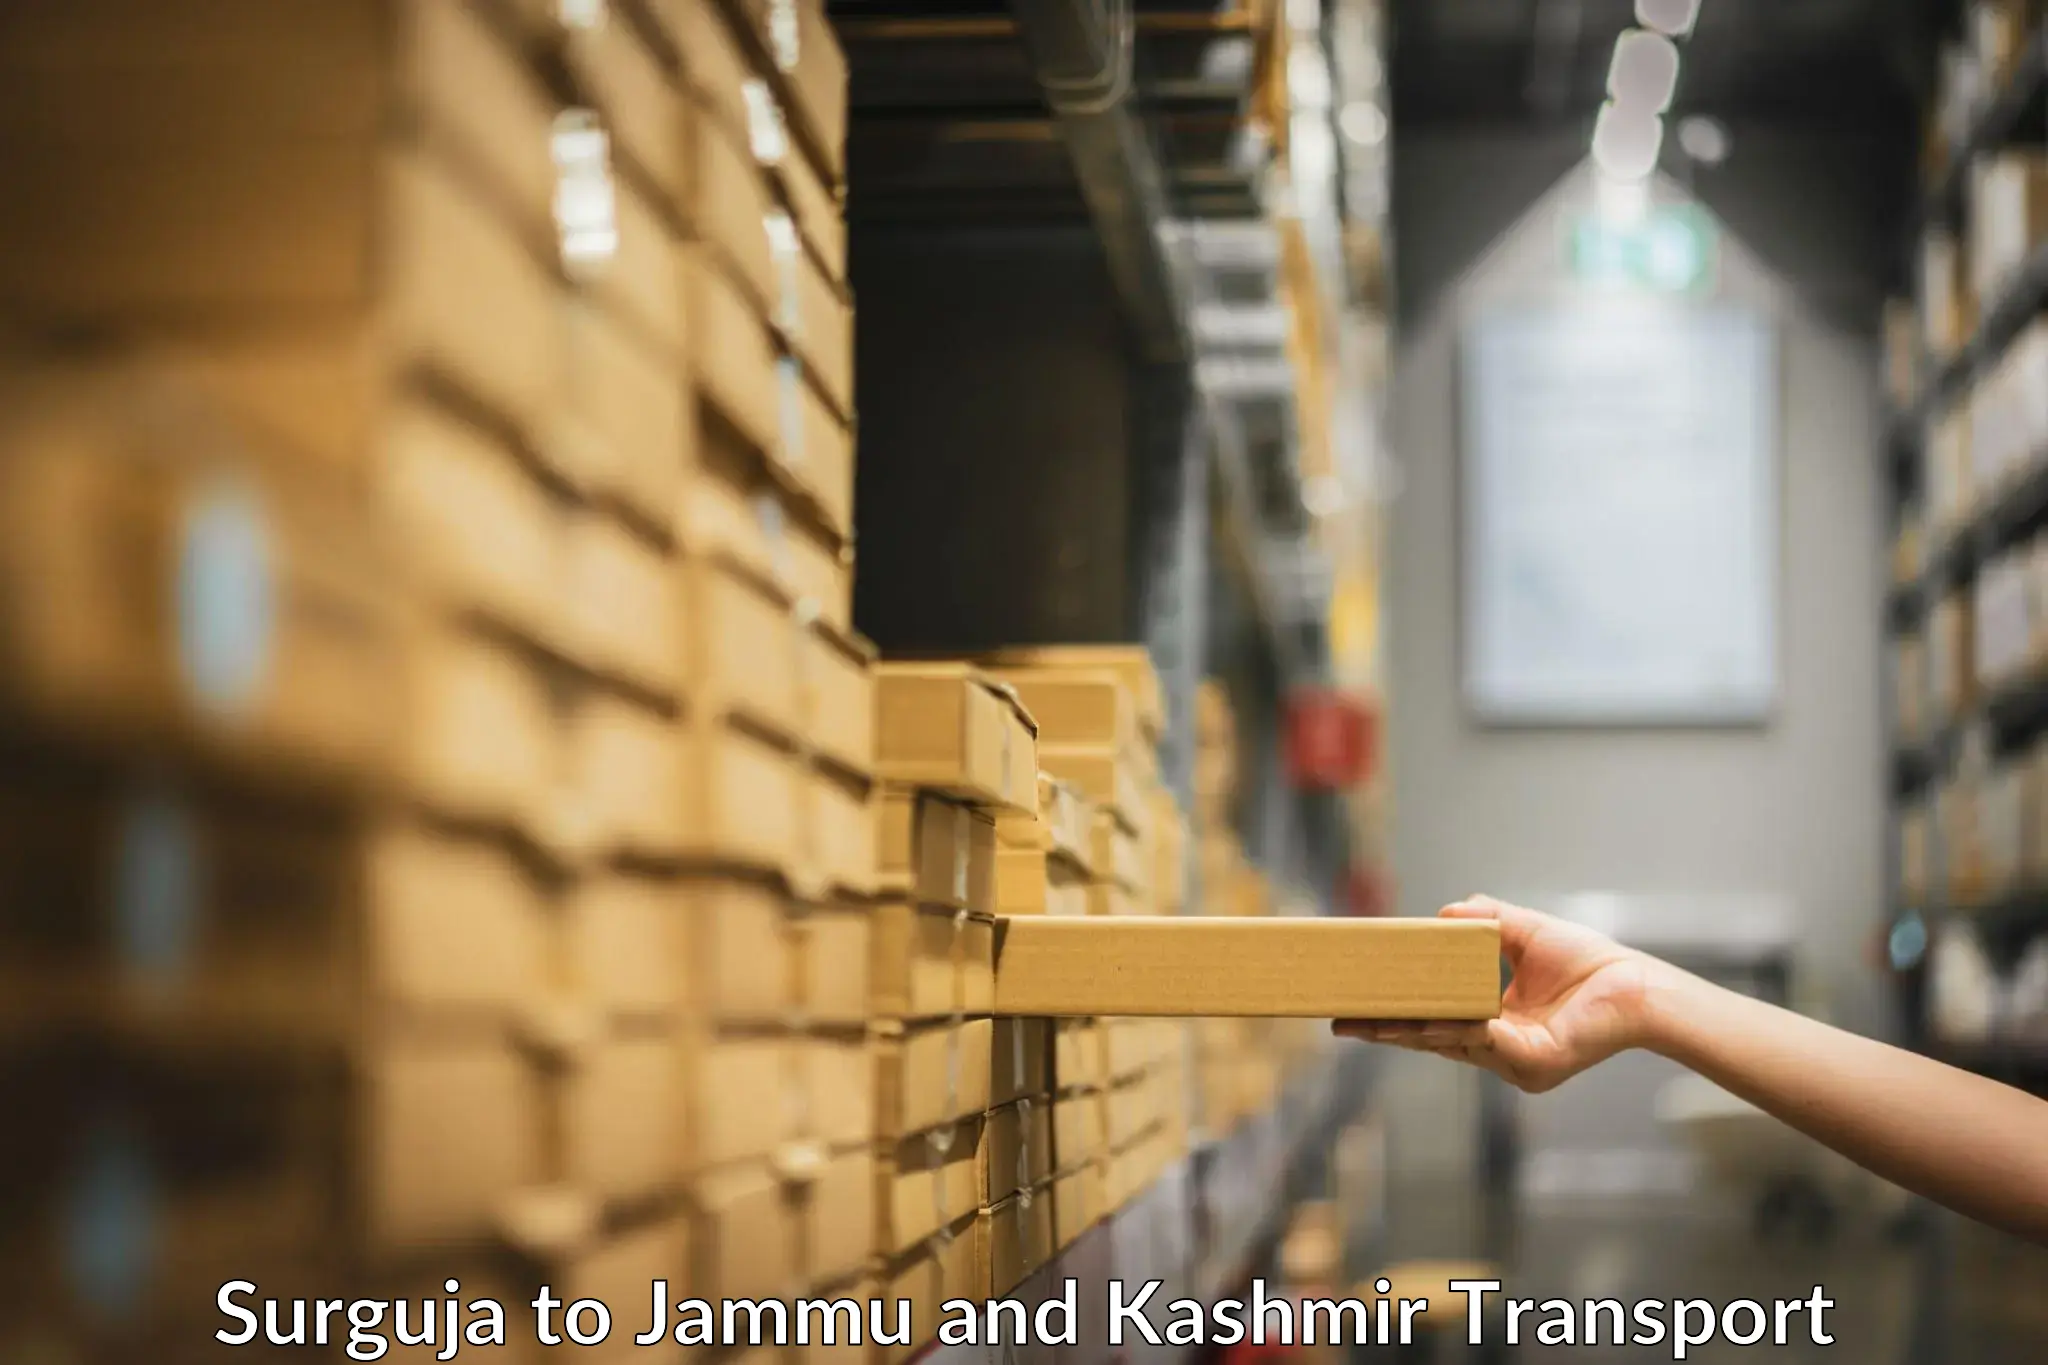 Road transport online services Surguja to Srinagar Kashmir